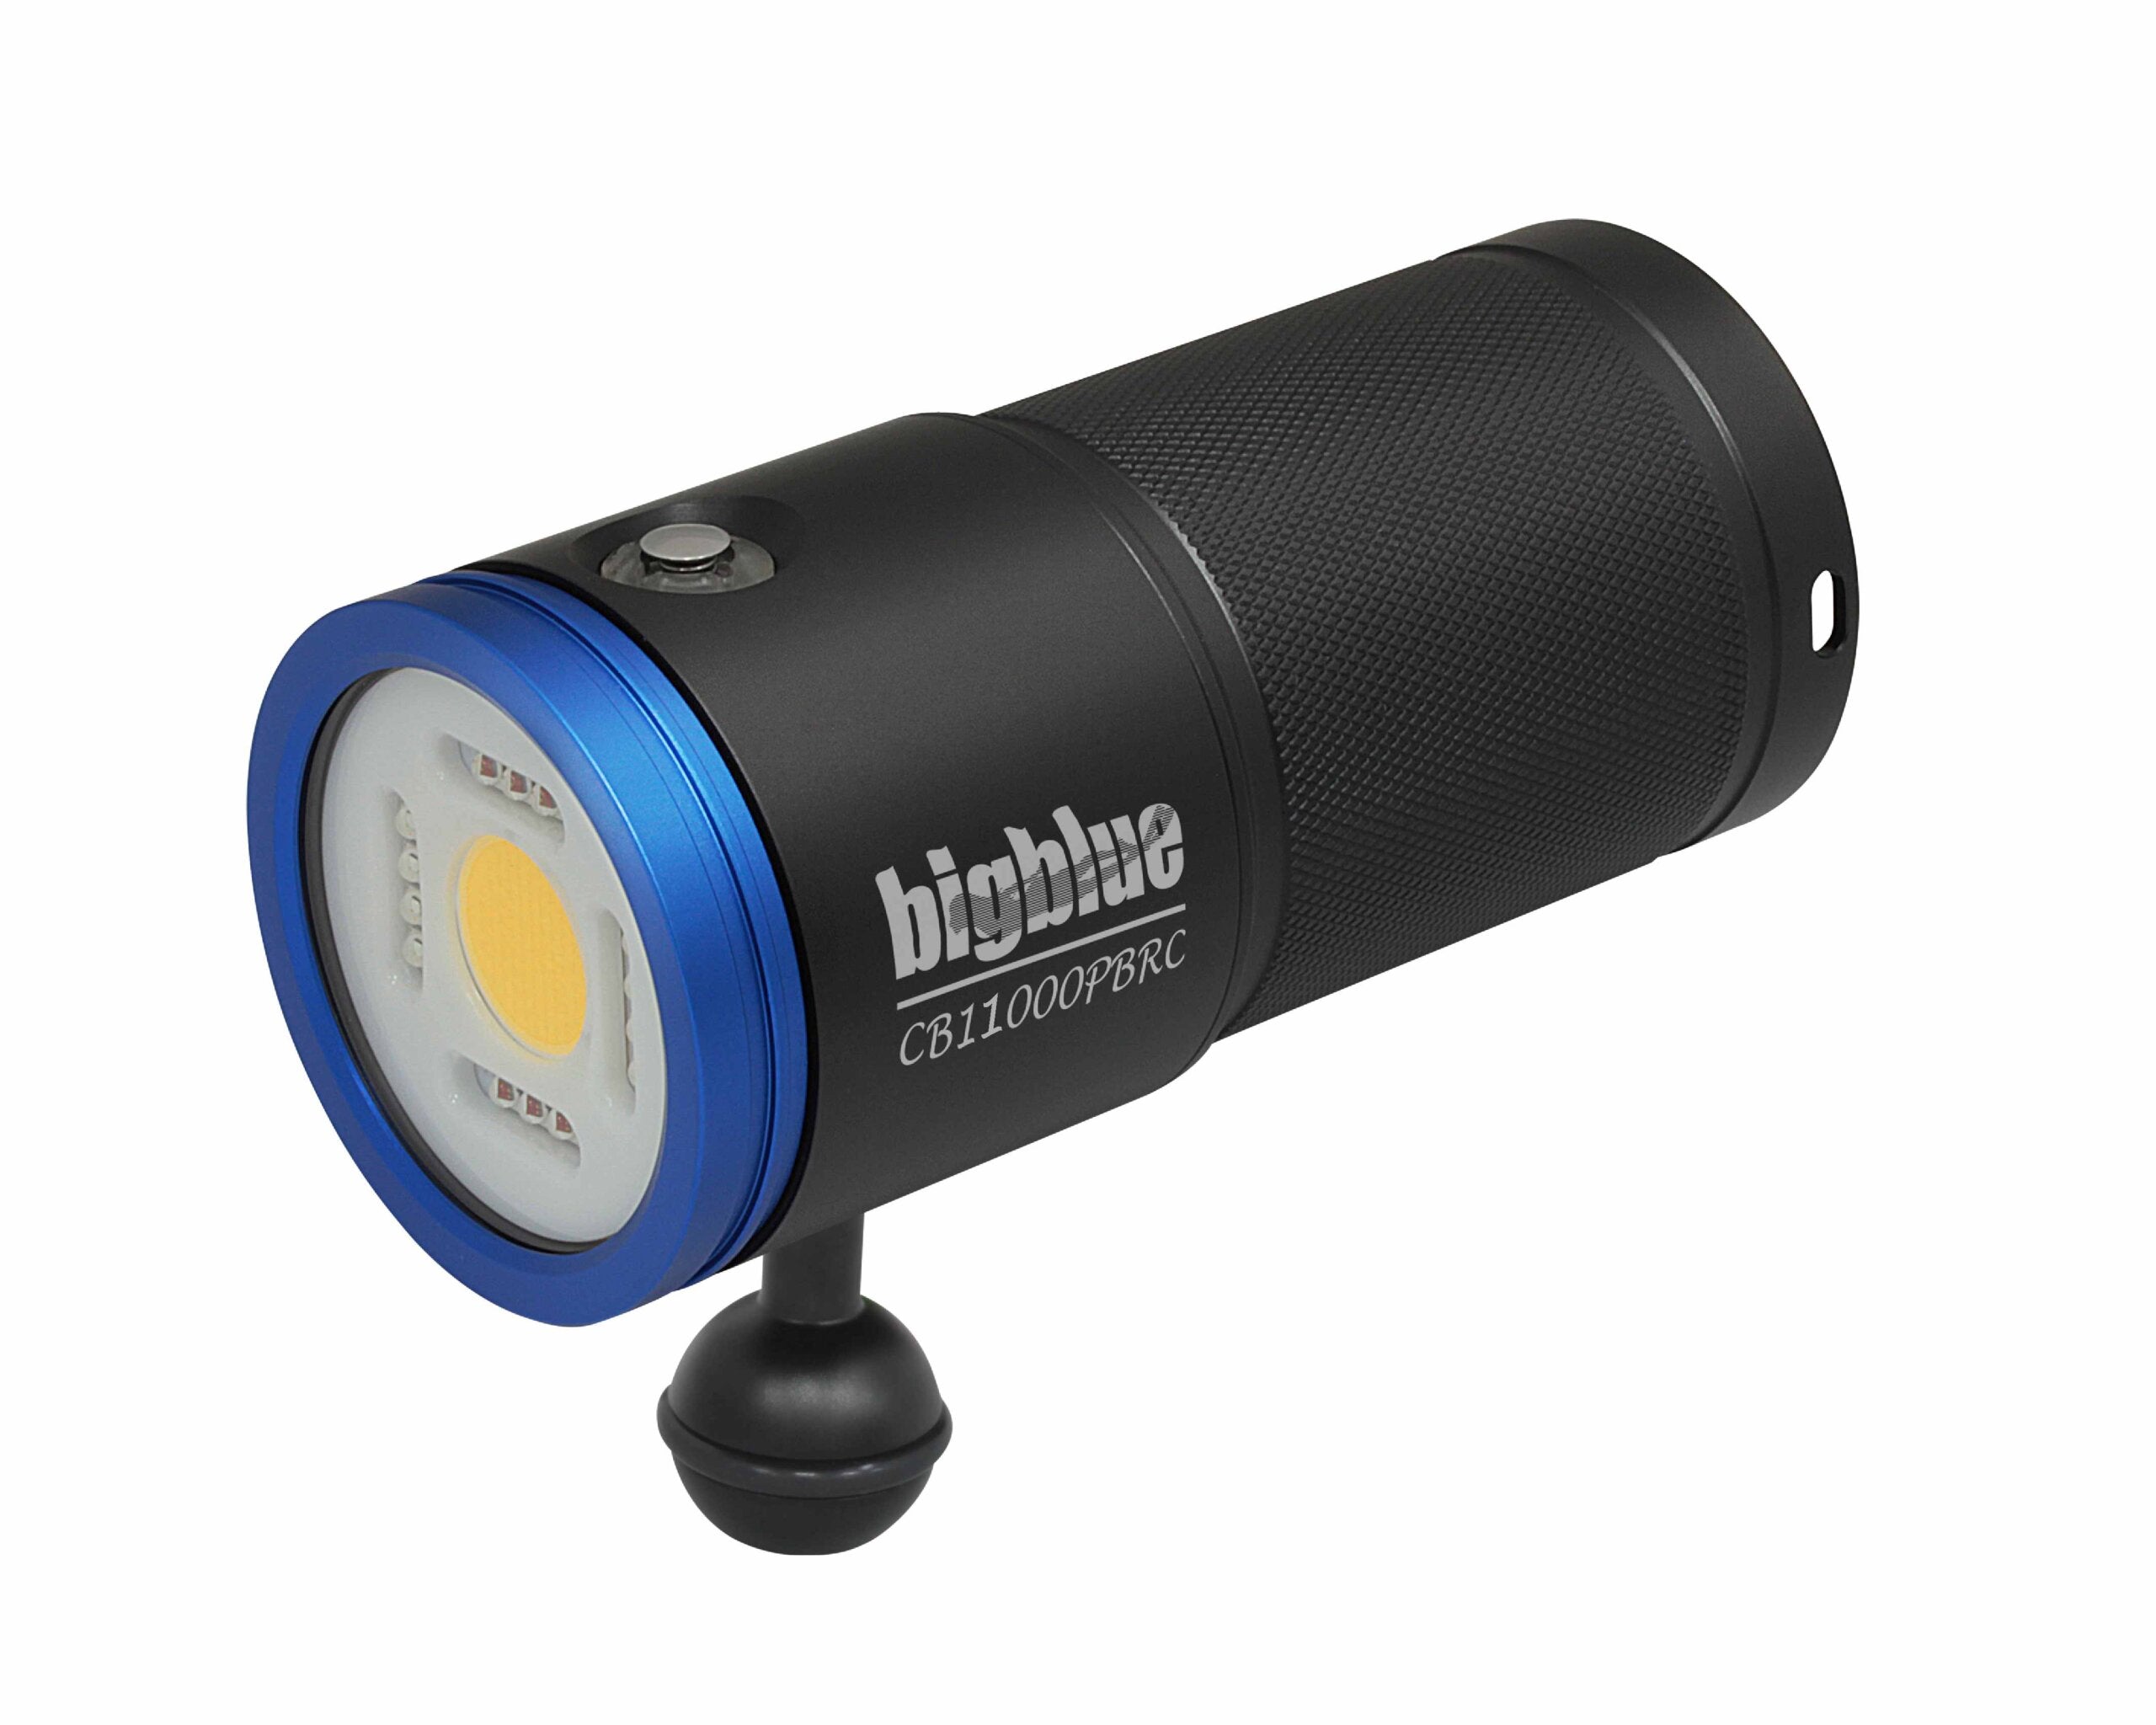 Bigblue CB11000PB-RC 11,000-Lumen Video Light – Remote Control Ready with Built-in Blue Light